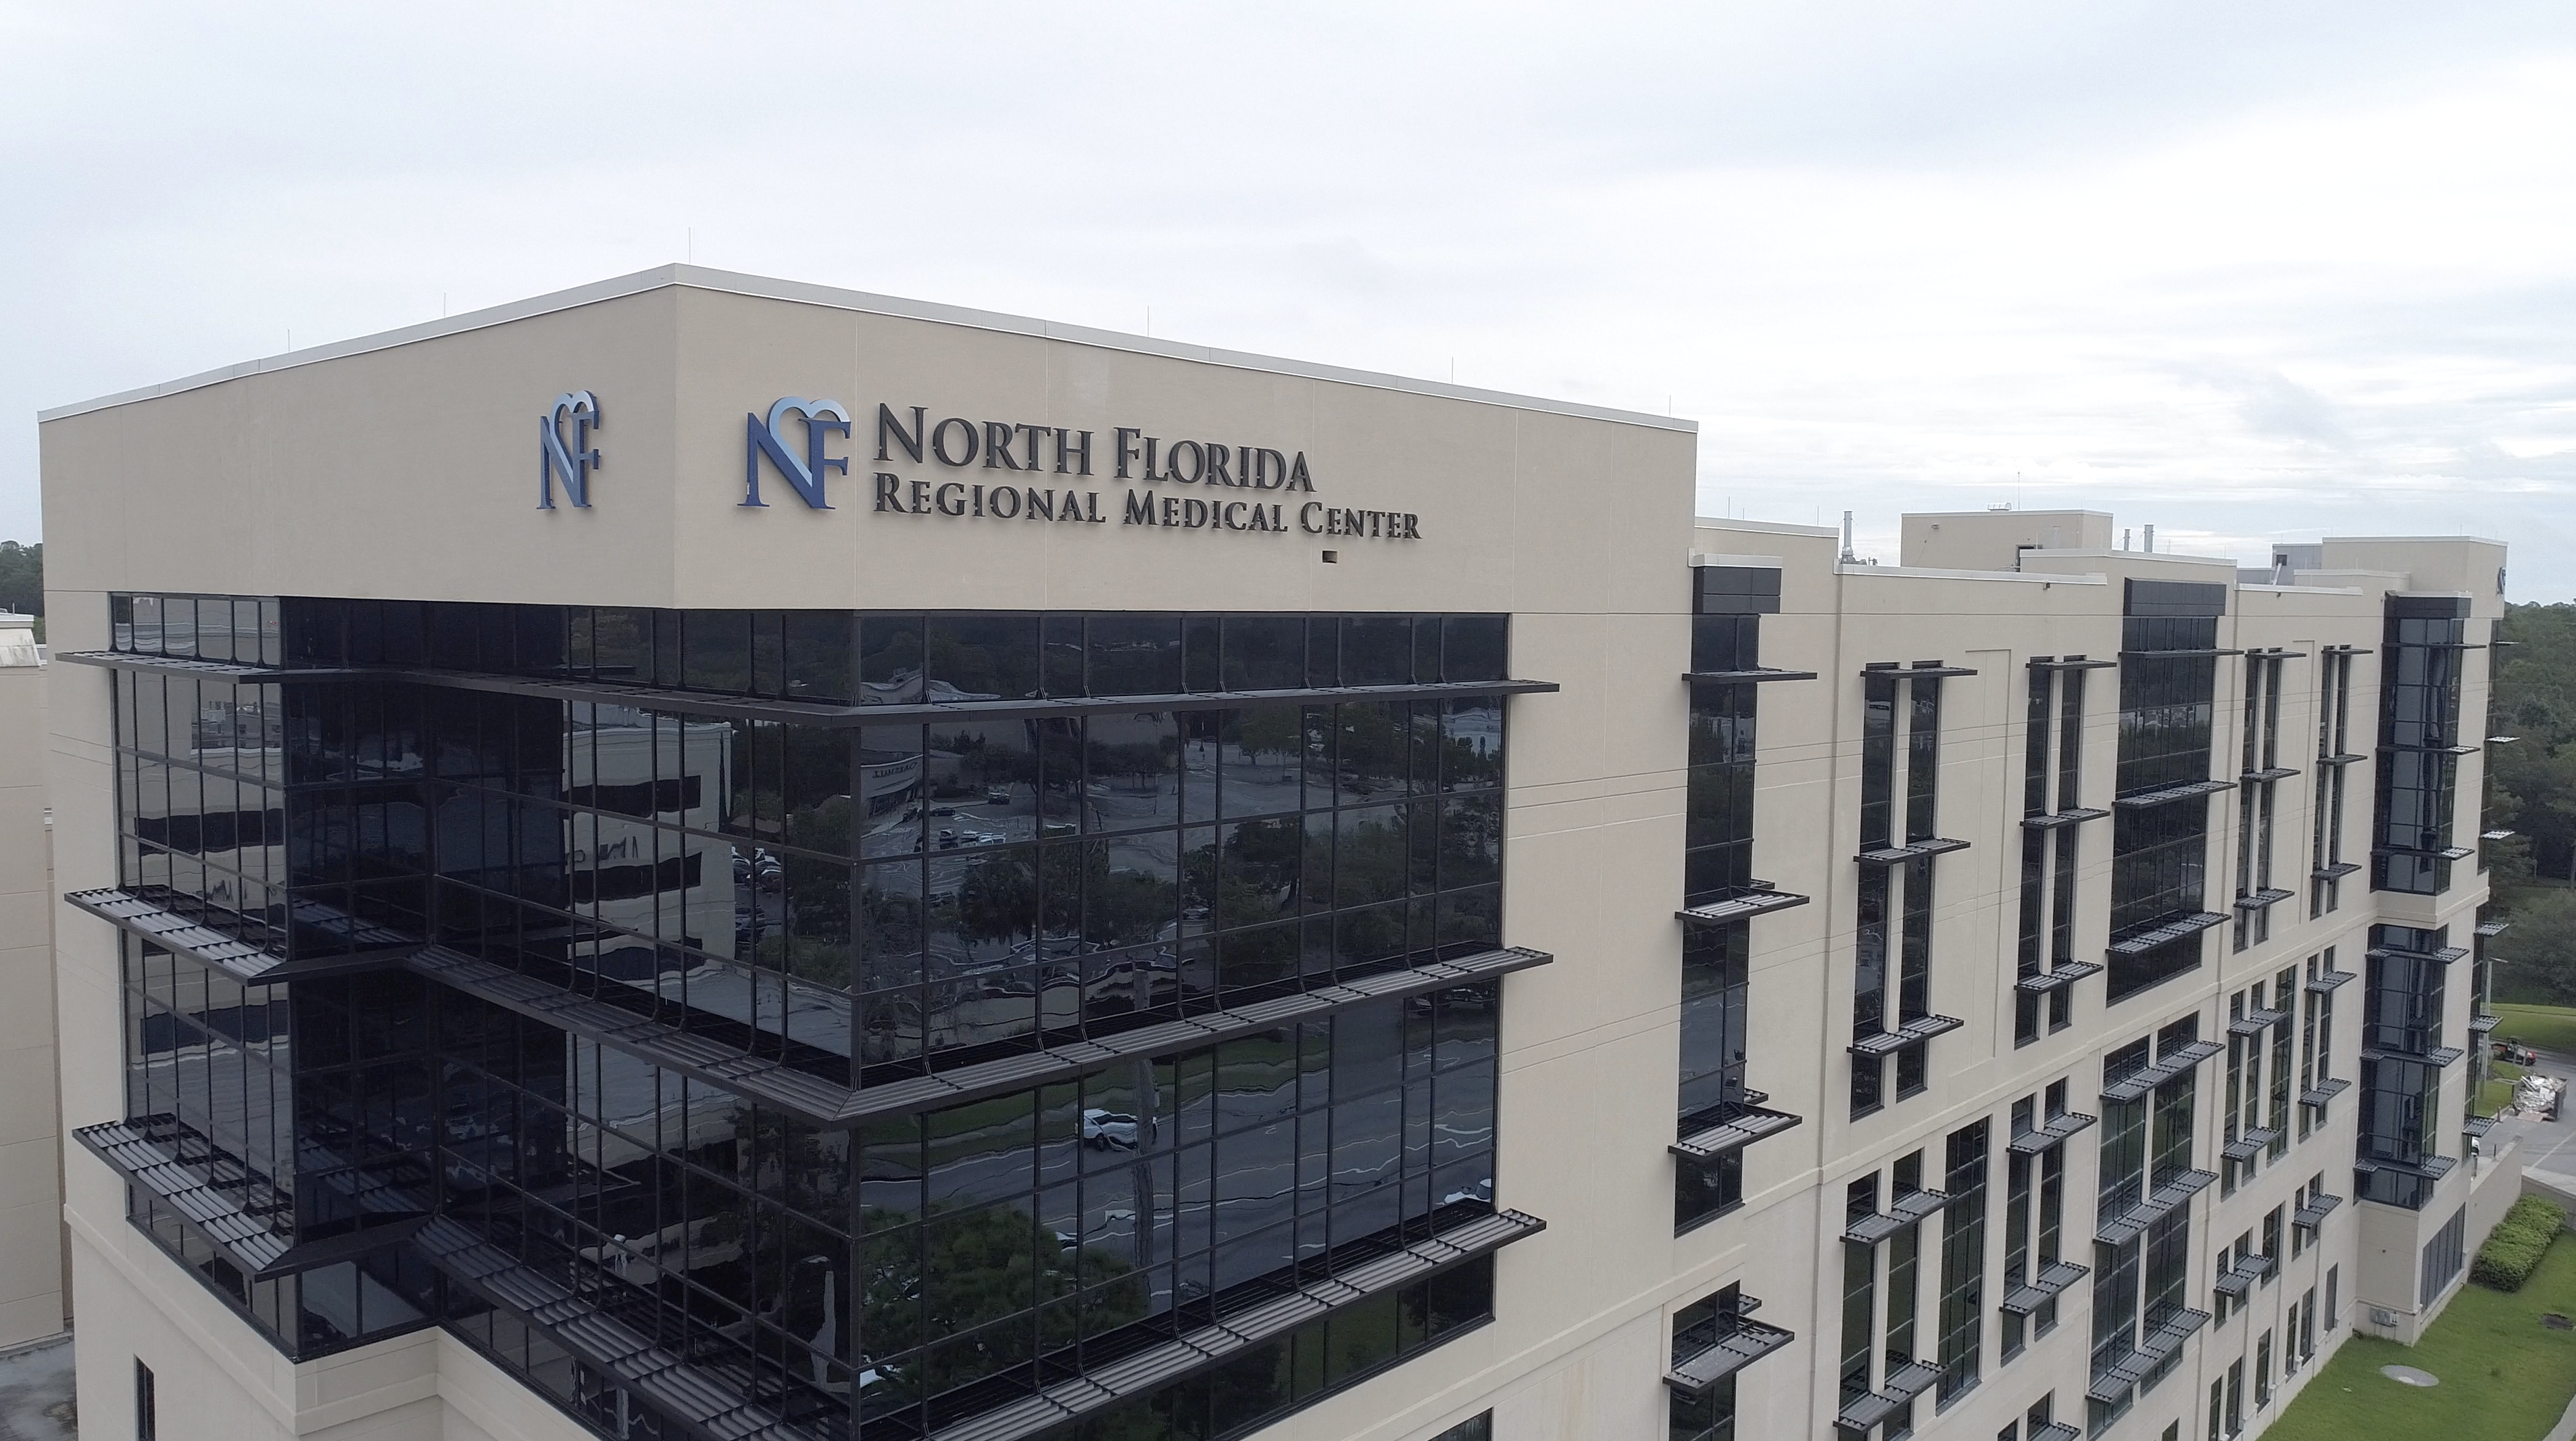 North Florida Regional Medical Center exterior.